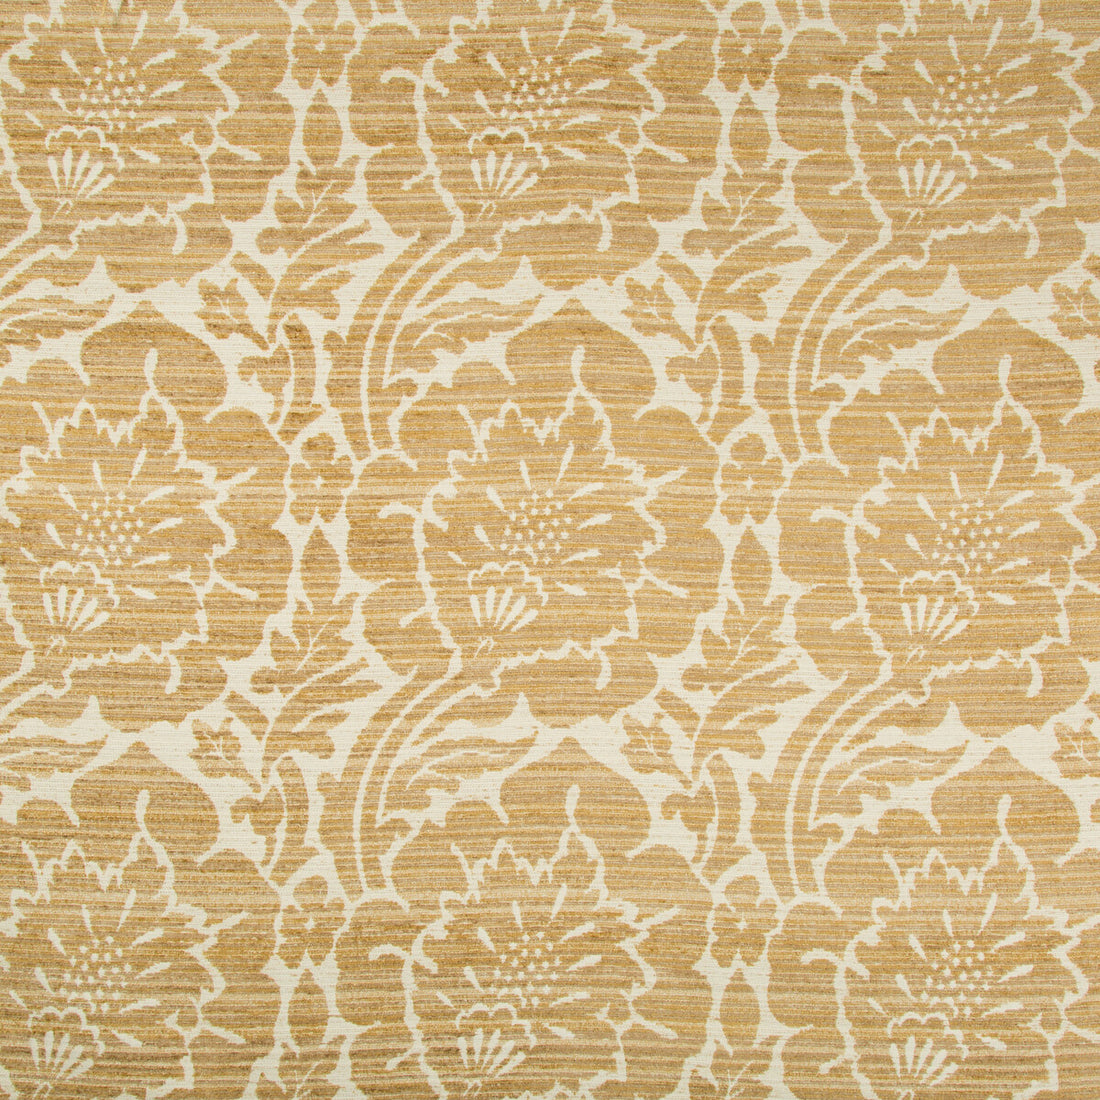 Kravet Design fabric in 34712-4 color - pattern 34712.4.0 - by Kravet Design in the Gis collection